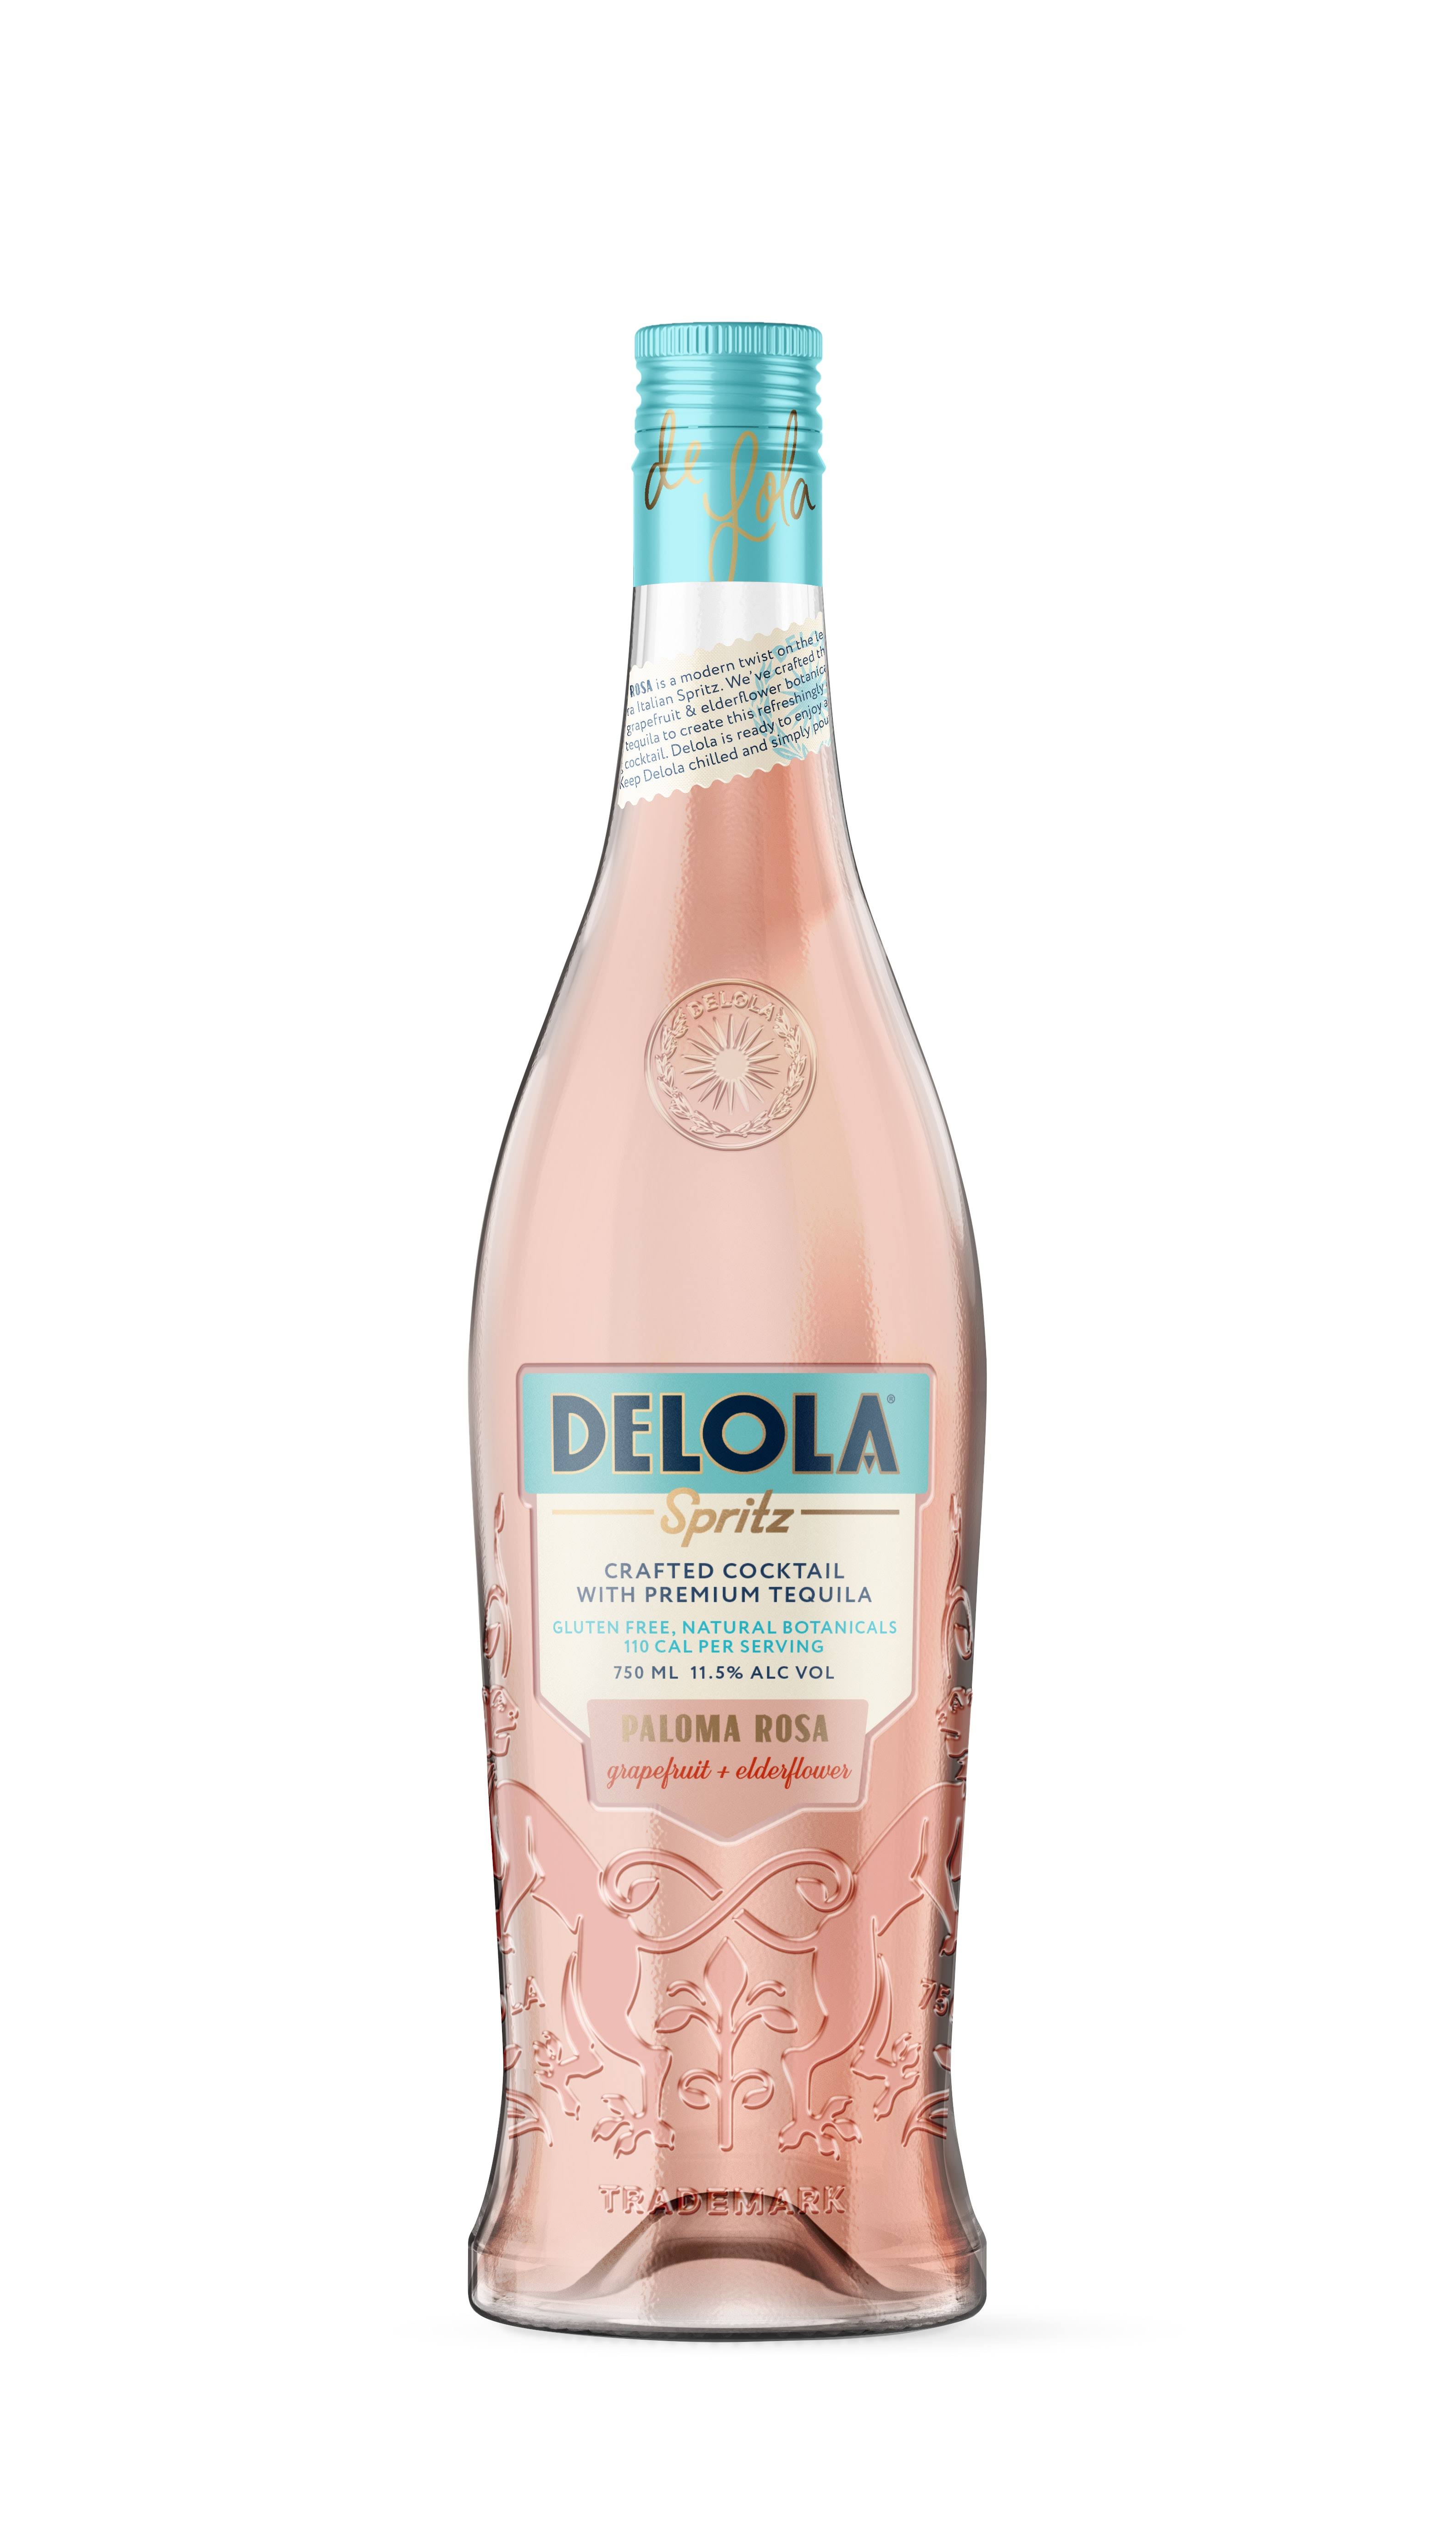 Delola Paloma Rosa Spritz - 750 ml